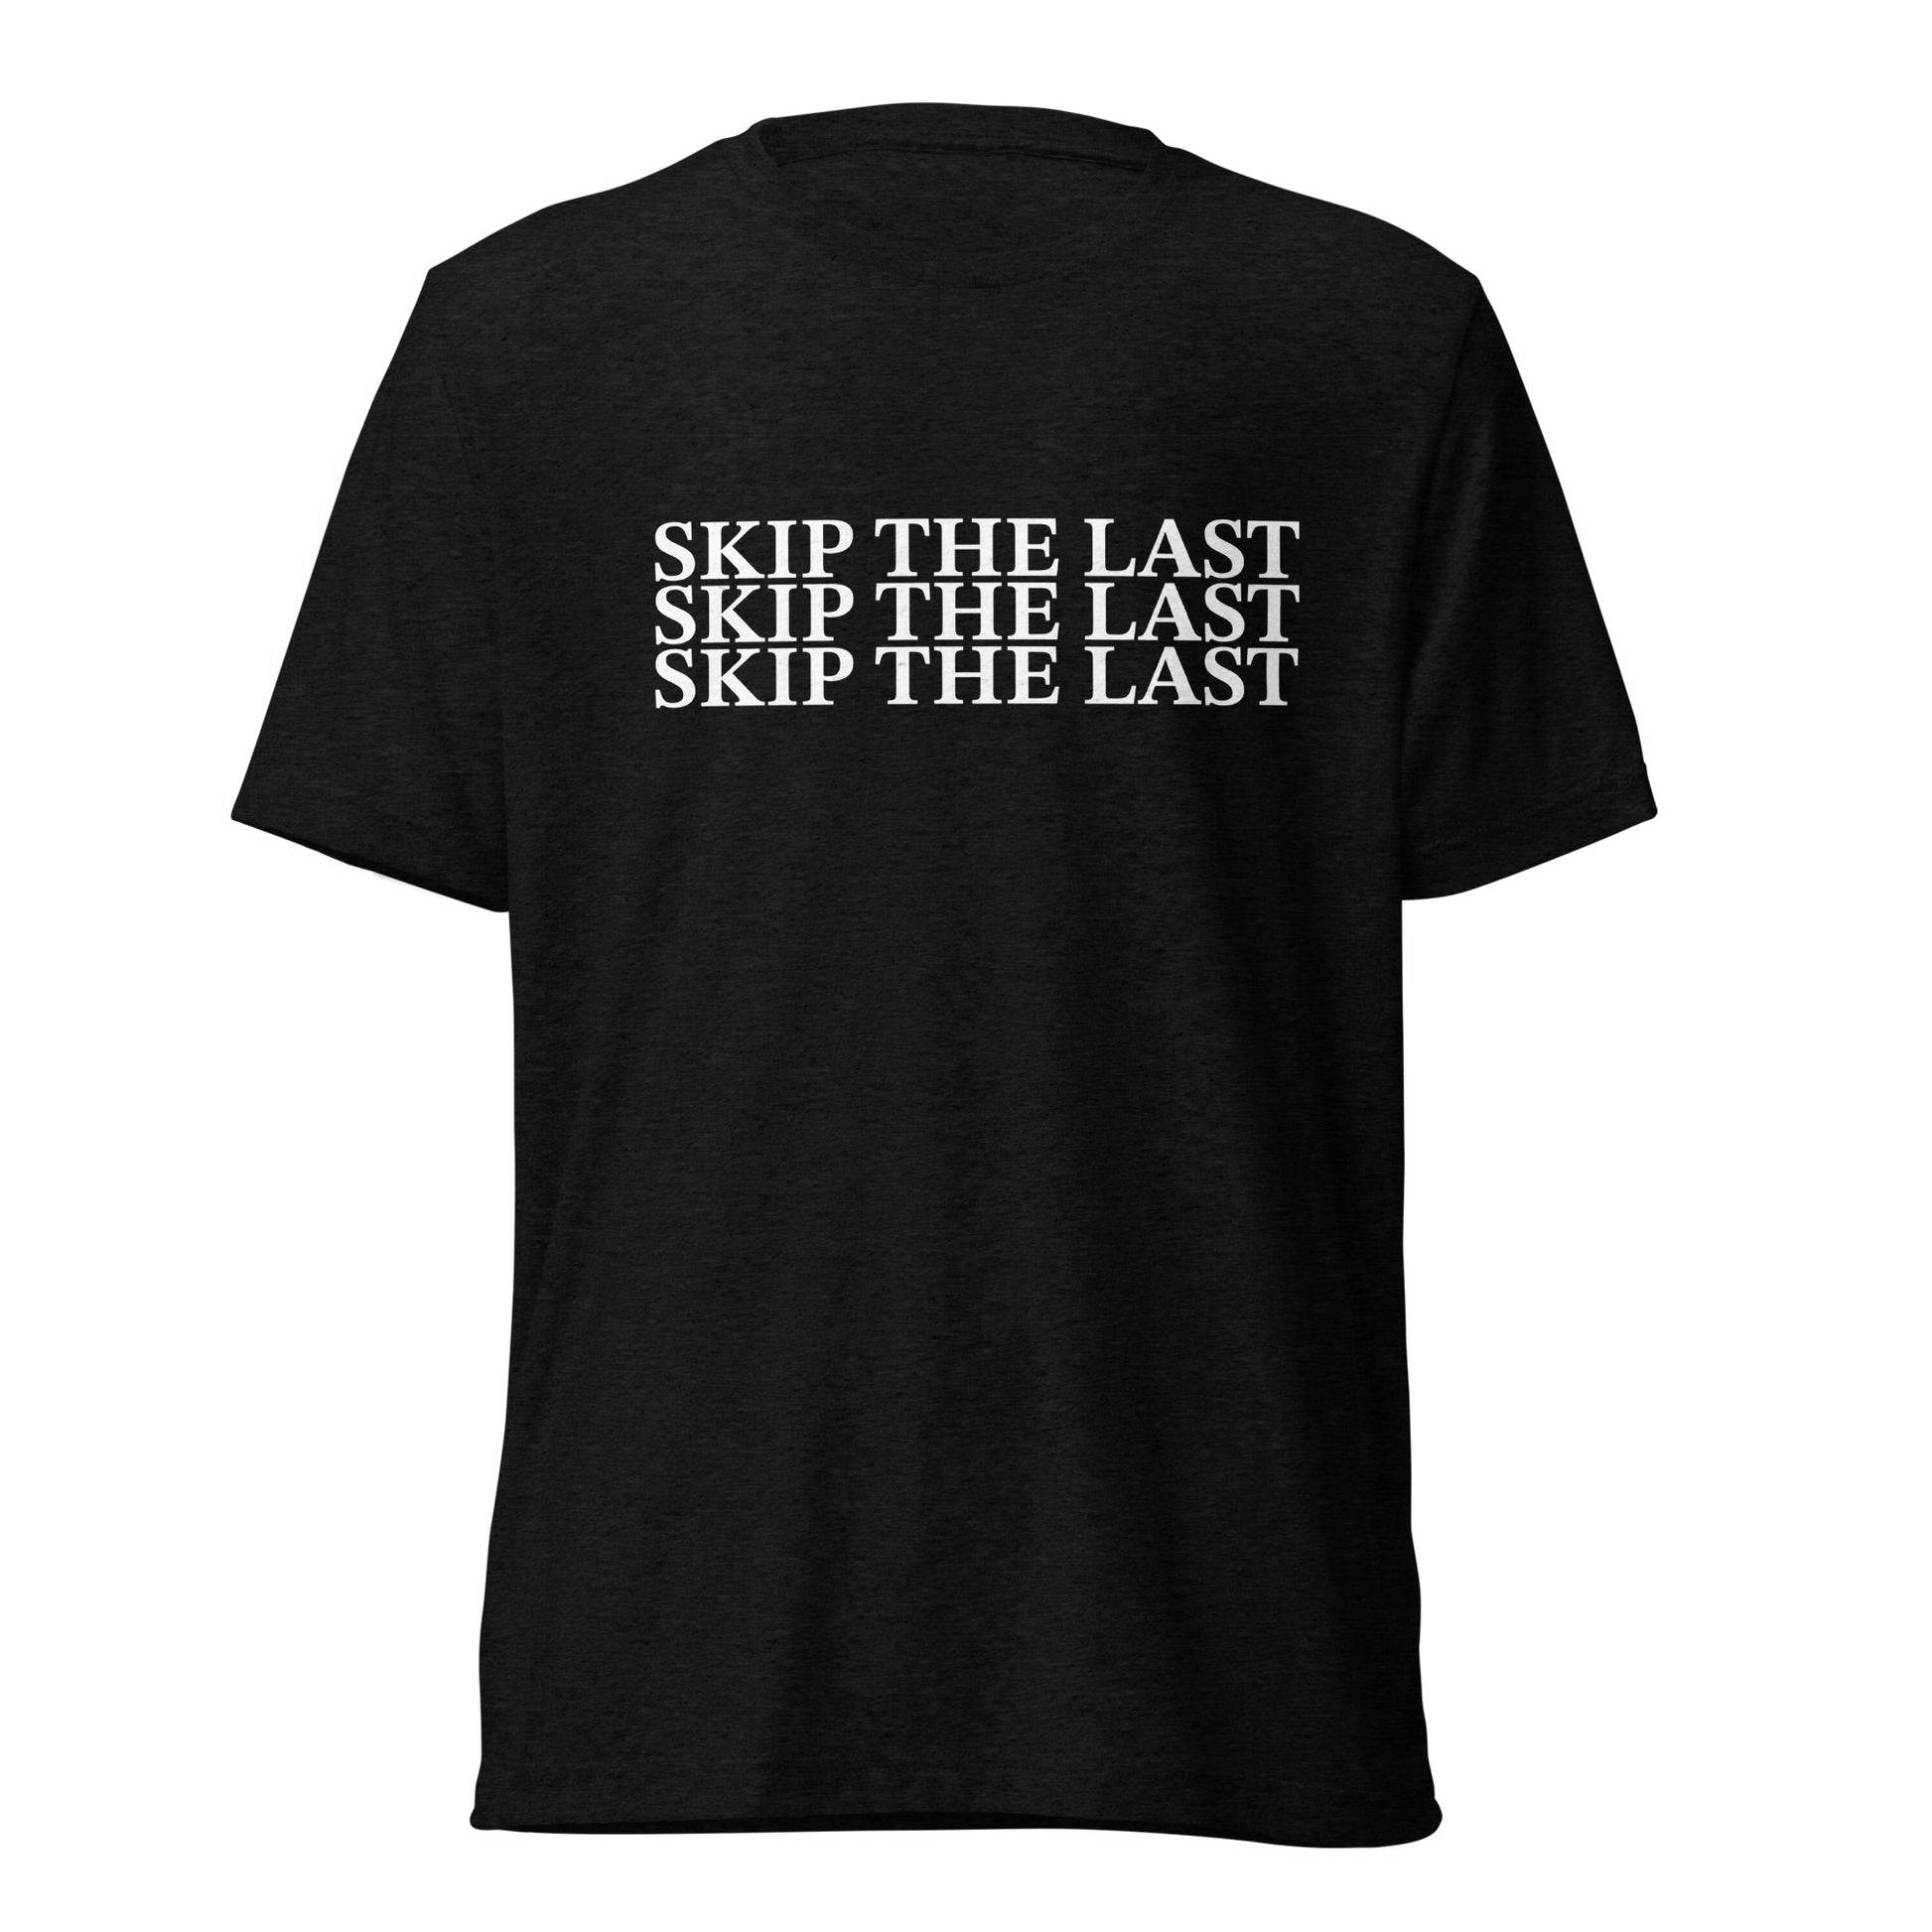 Two More Skip The Last "Skip the Last x3" black unisex tri-blend t-shirt. Front view